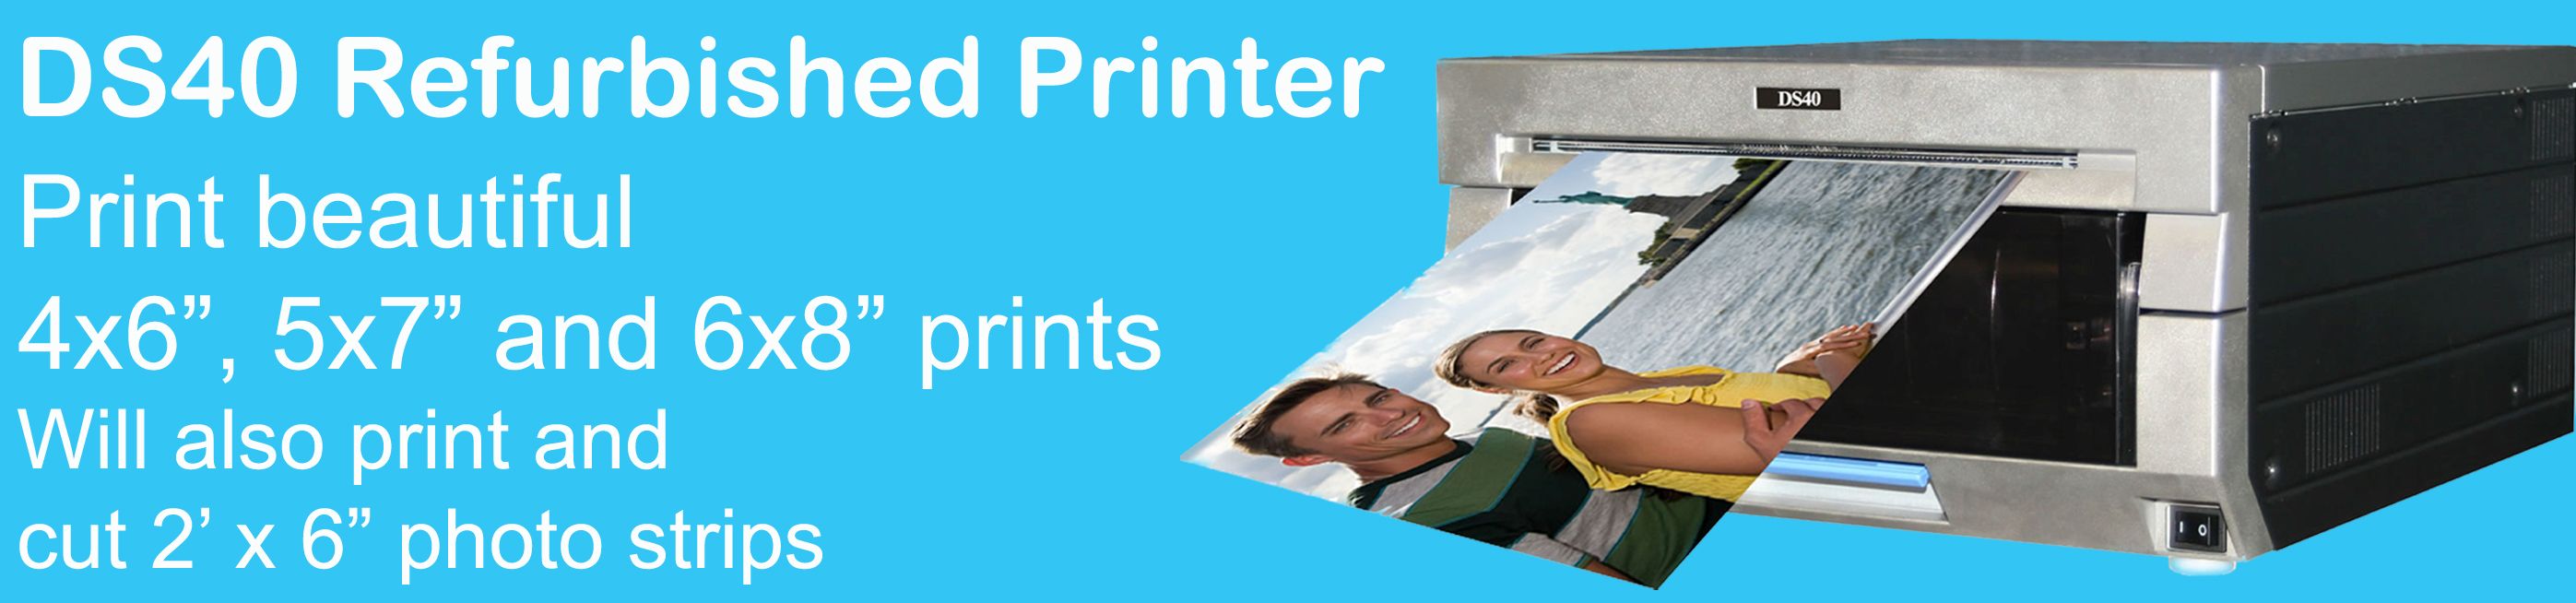 DS40 Refurbished Printer